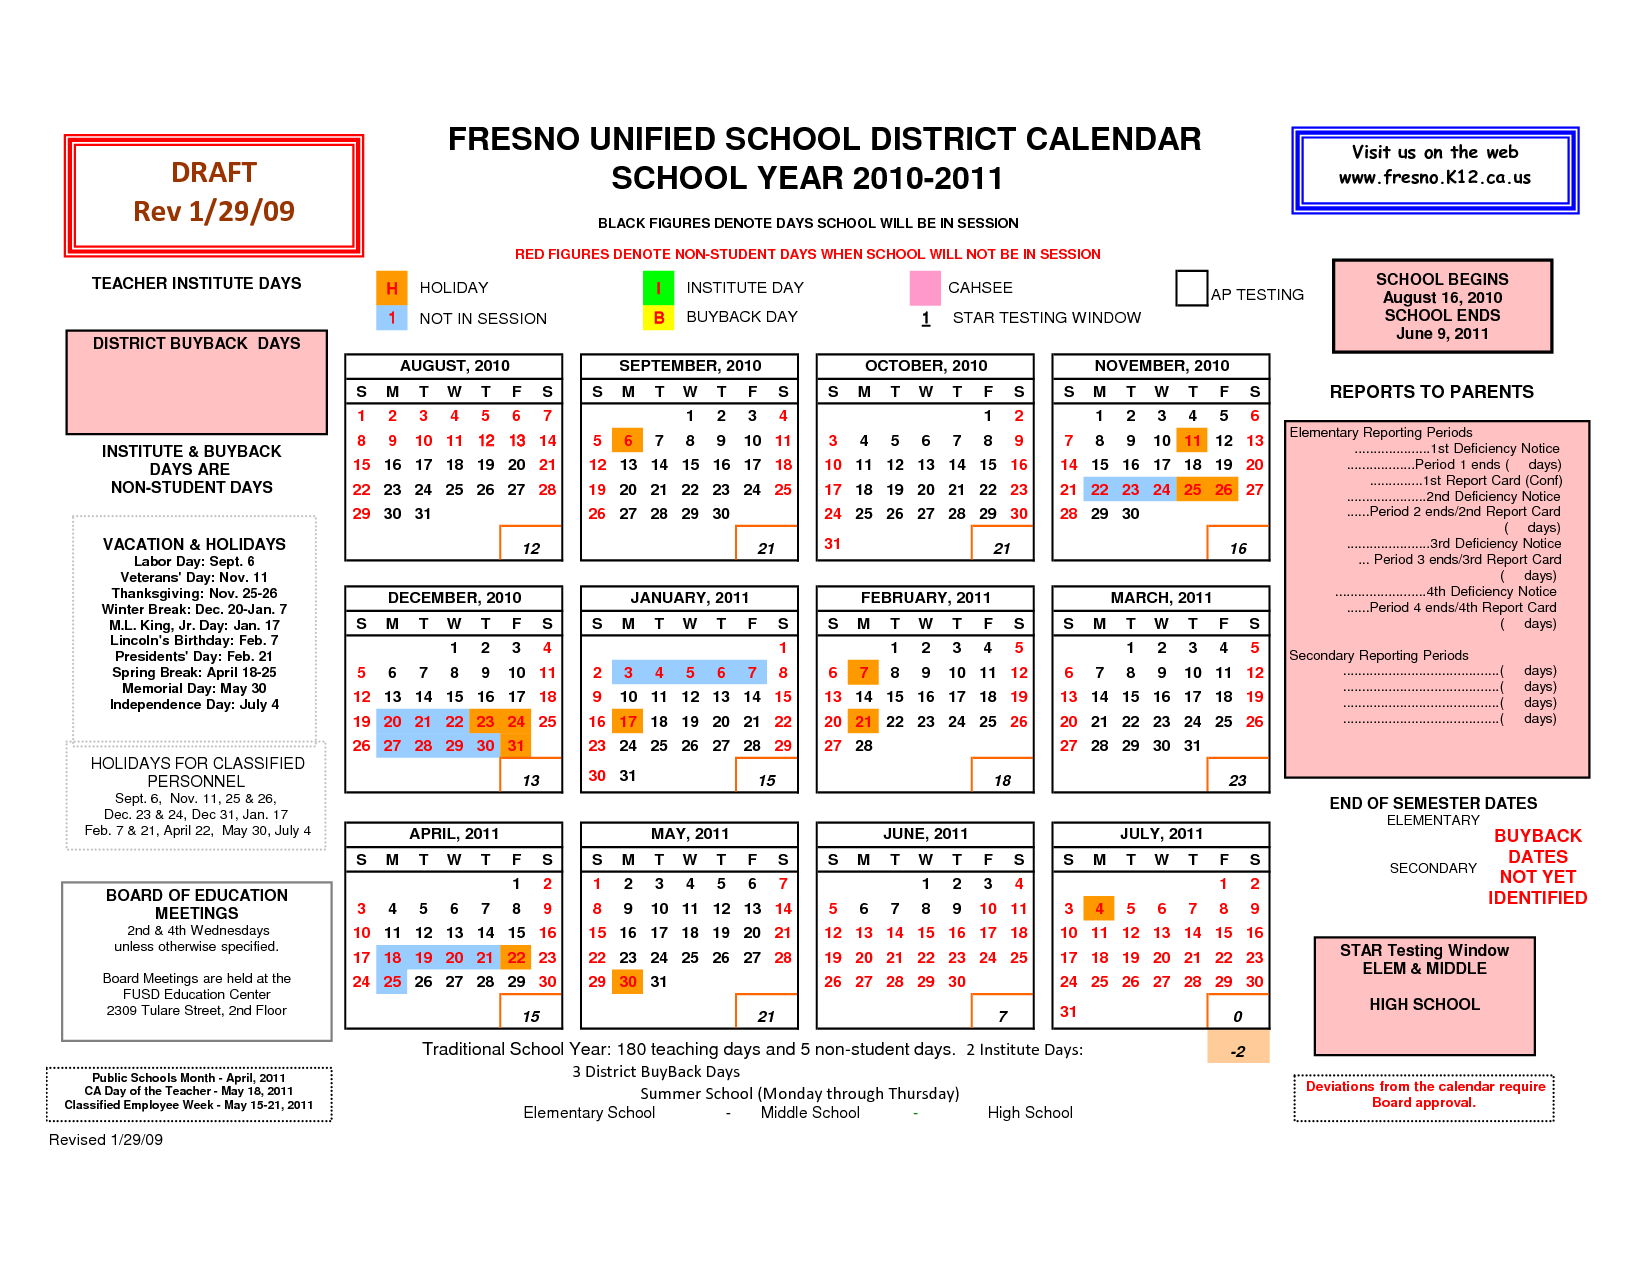 Fresno Events Calendar Calendar Template 2015 Calendar Template